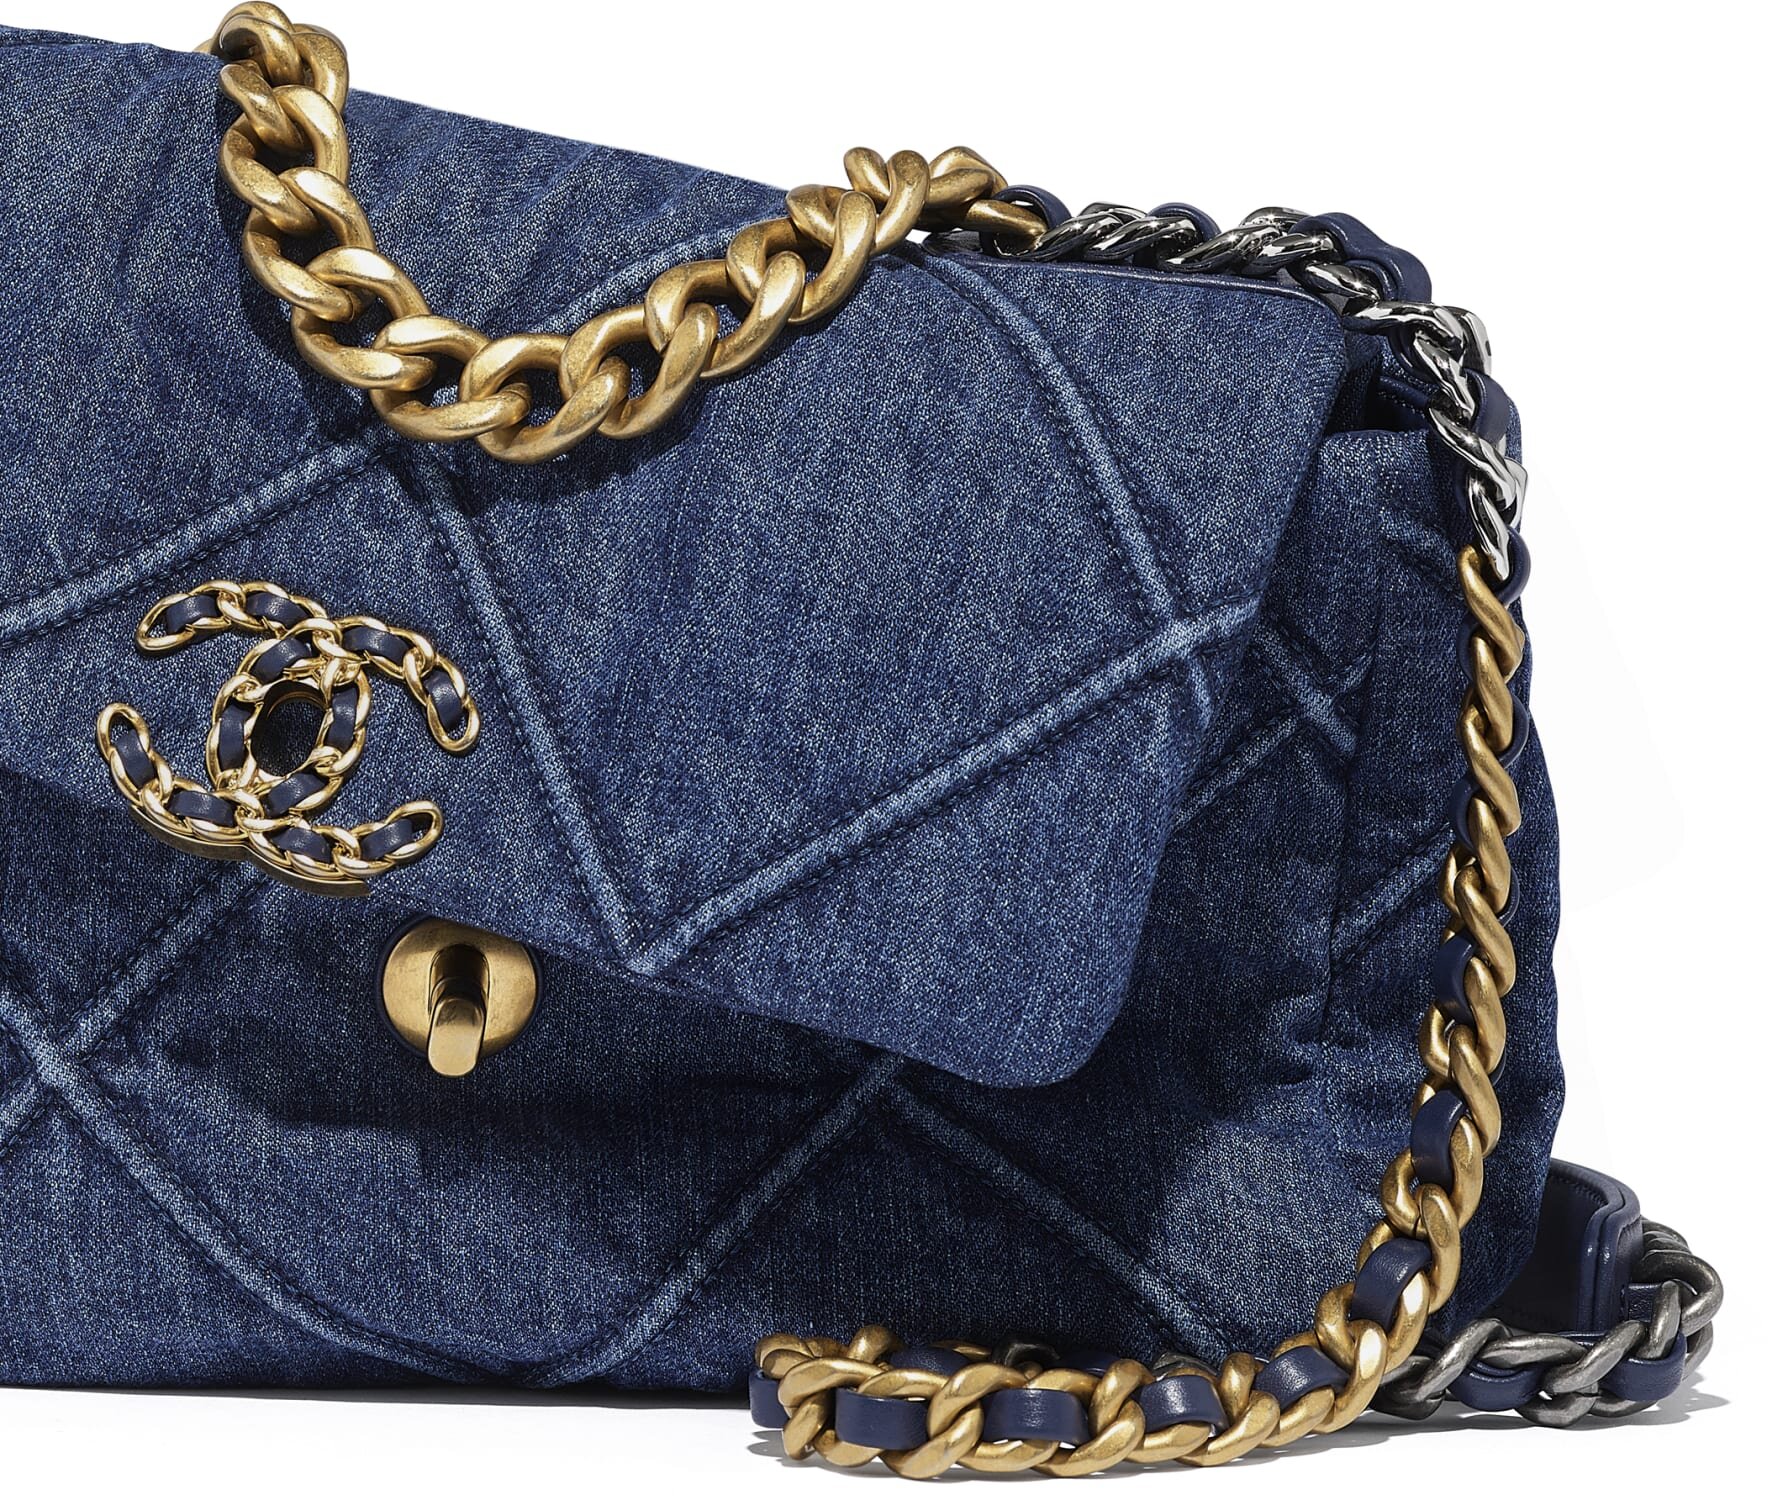 Chanel Spring Summer 2020 Handbags campaign featuring Margaret Qualley —  GUM Studios